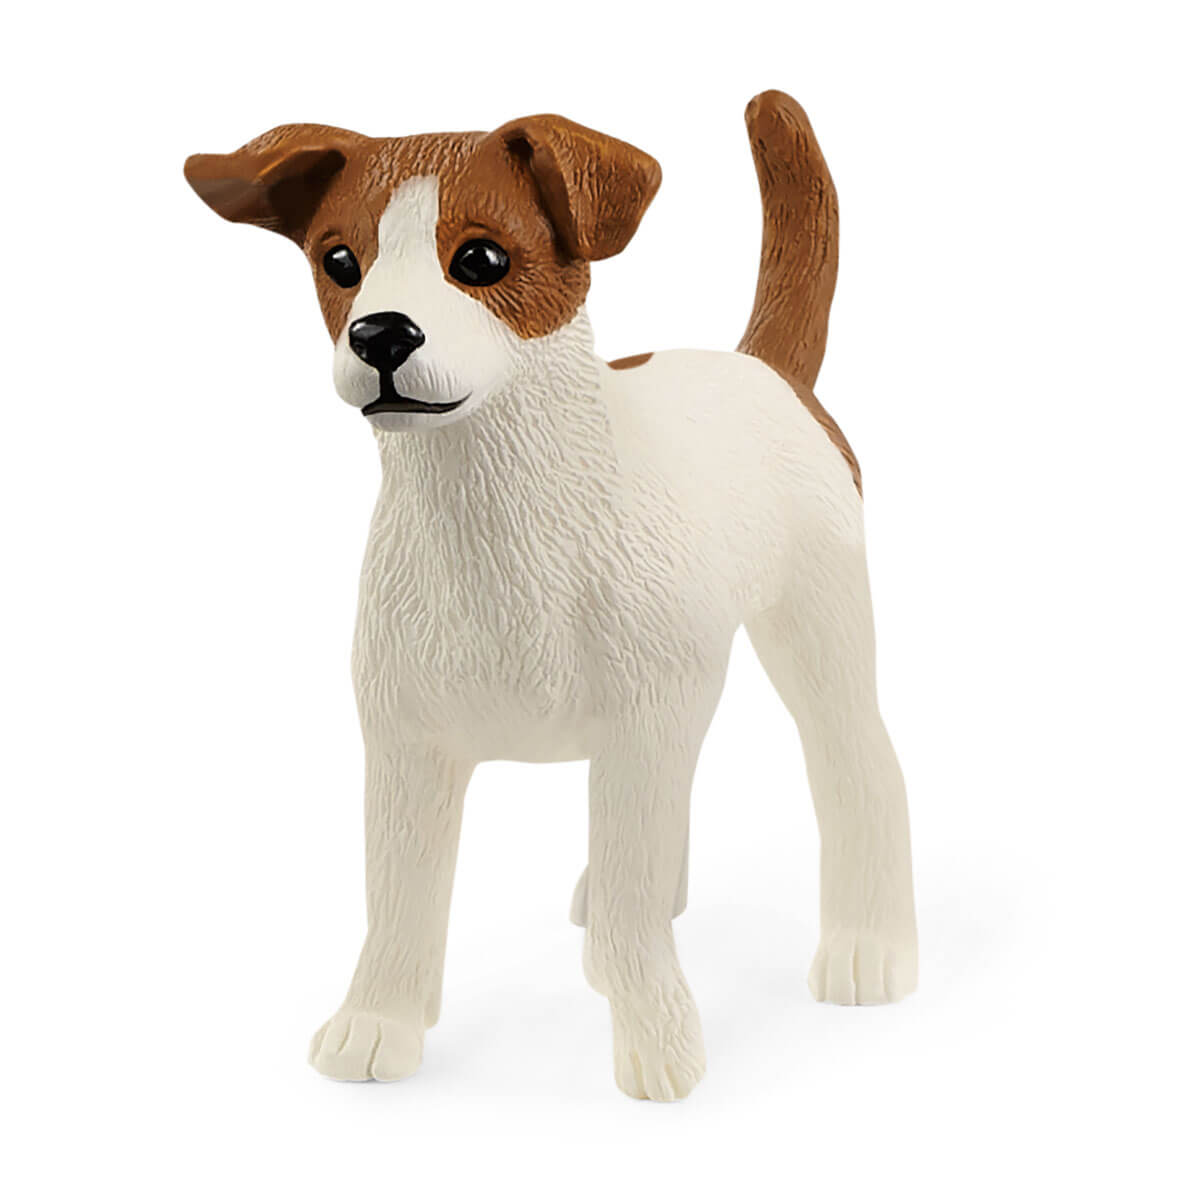 Jack Russell Terrier 2" Figure